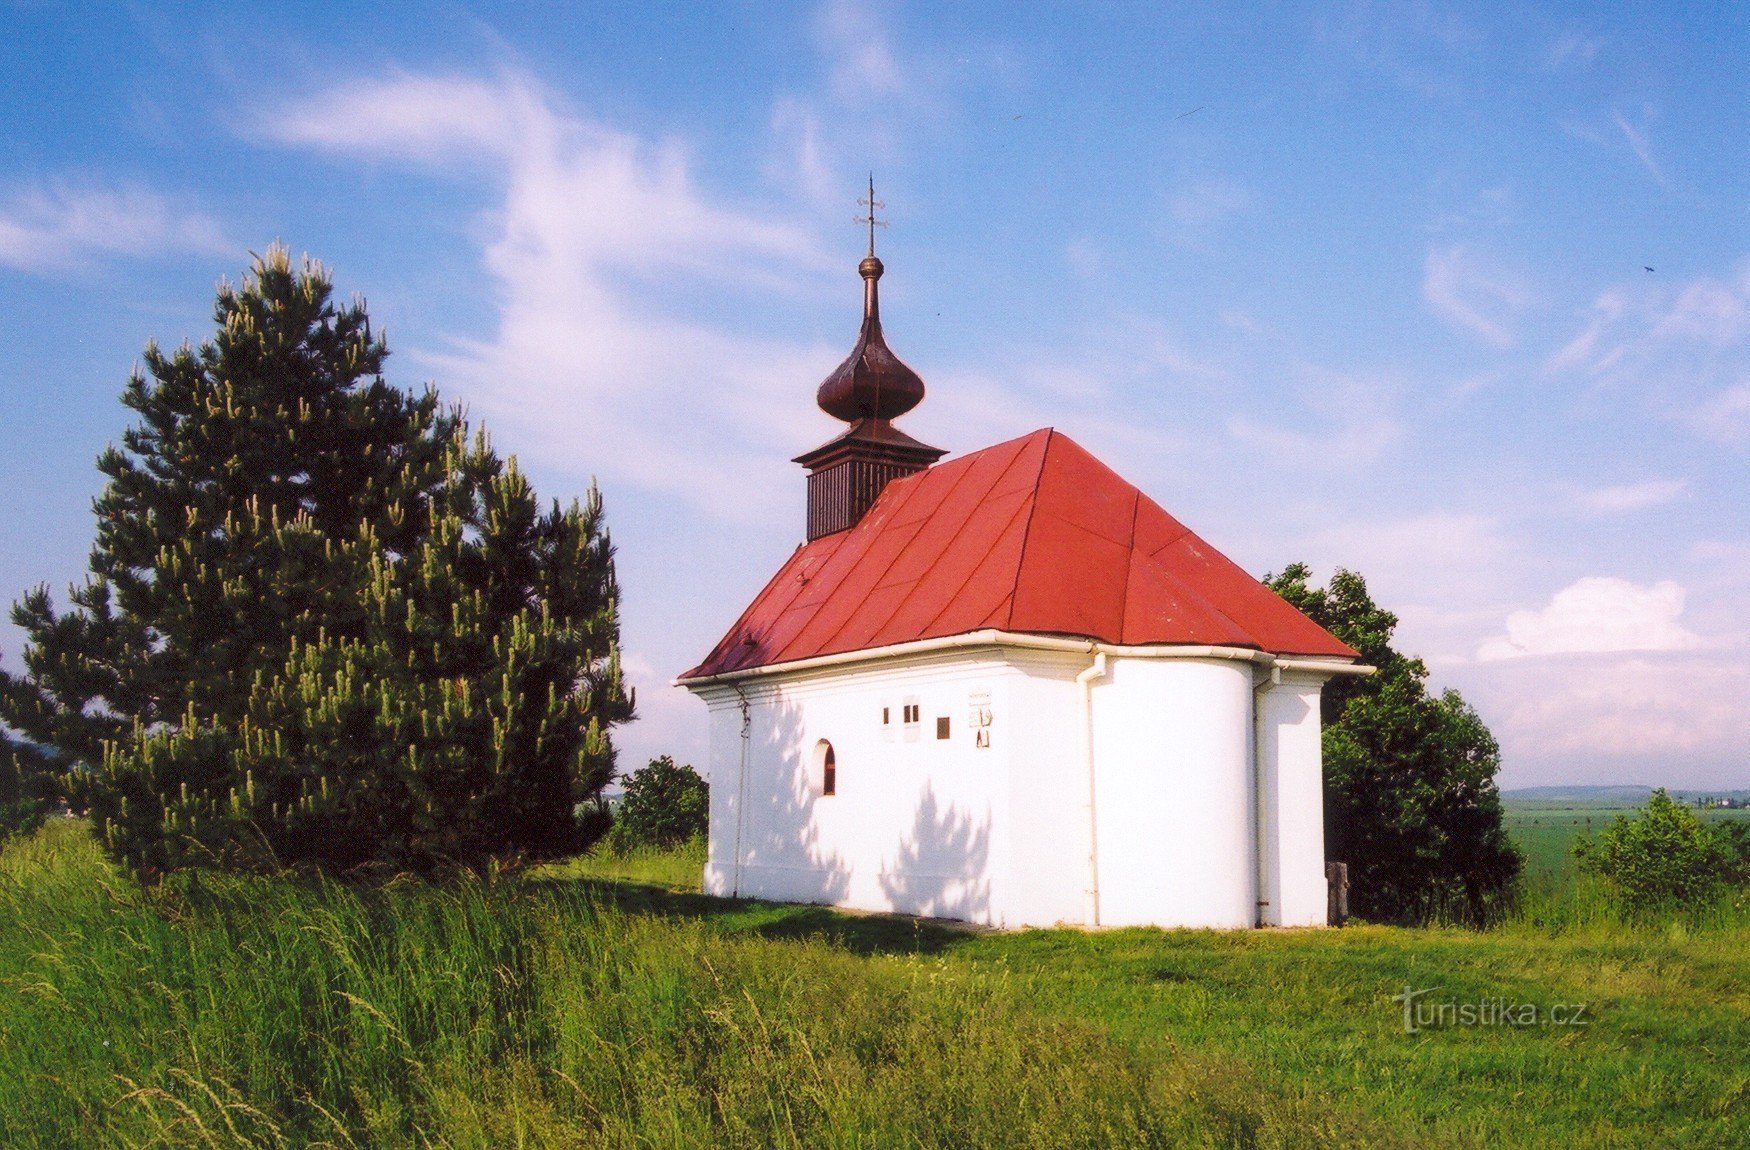 Die Kapelle auf dem Hügel